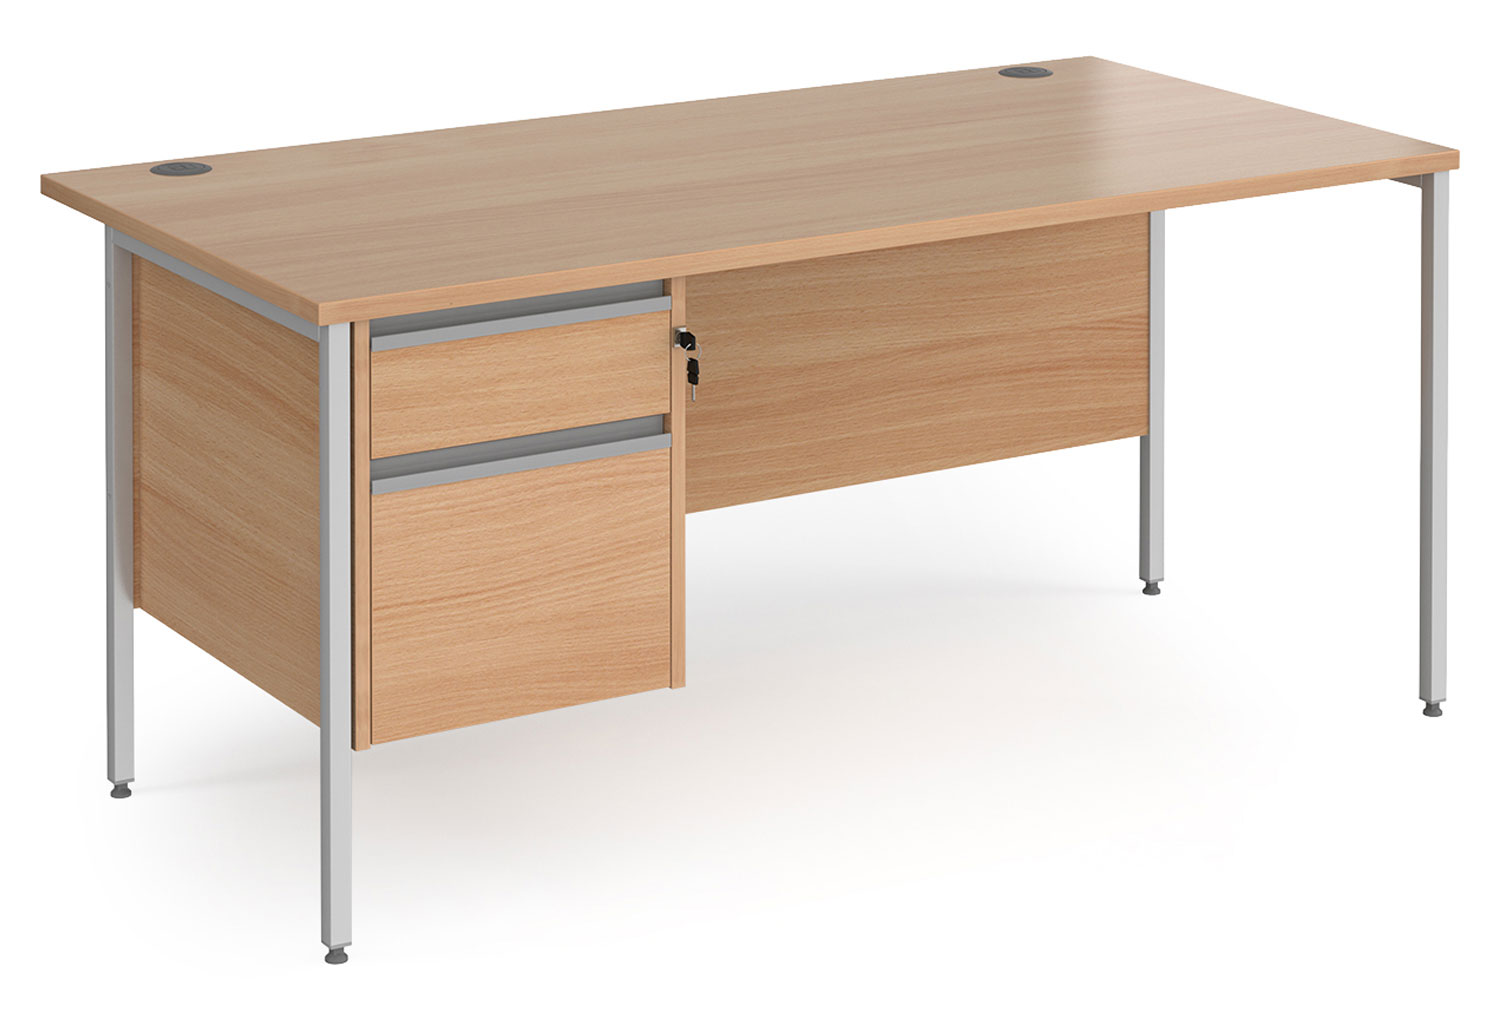 Value Line Classic+ Rectangular H-Leg Office Desk 2 Drawers (Silver Leg), 160wx80dx73h (cm), Beech